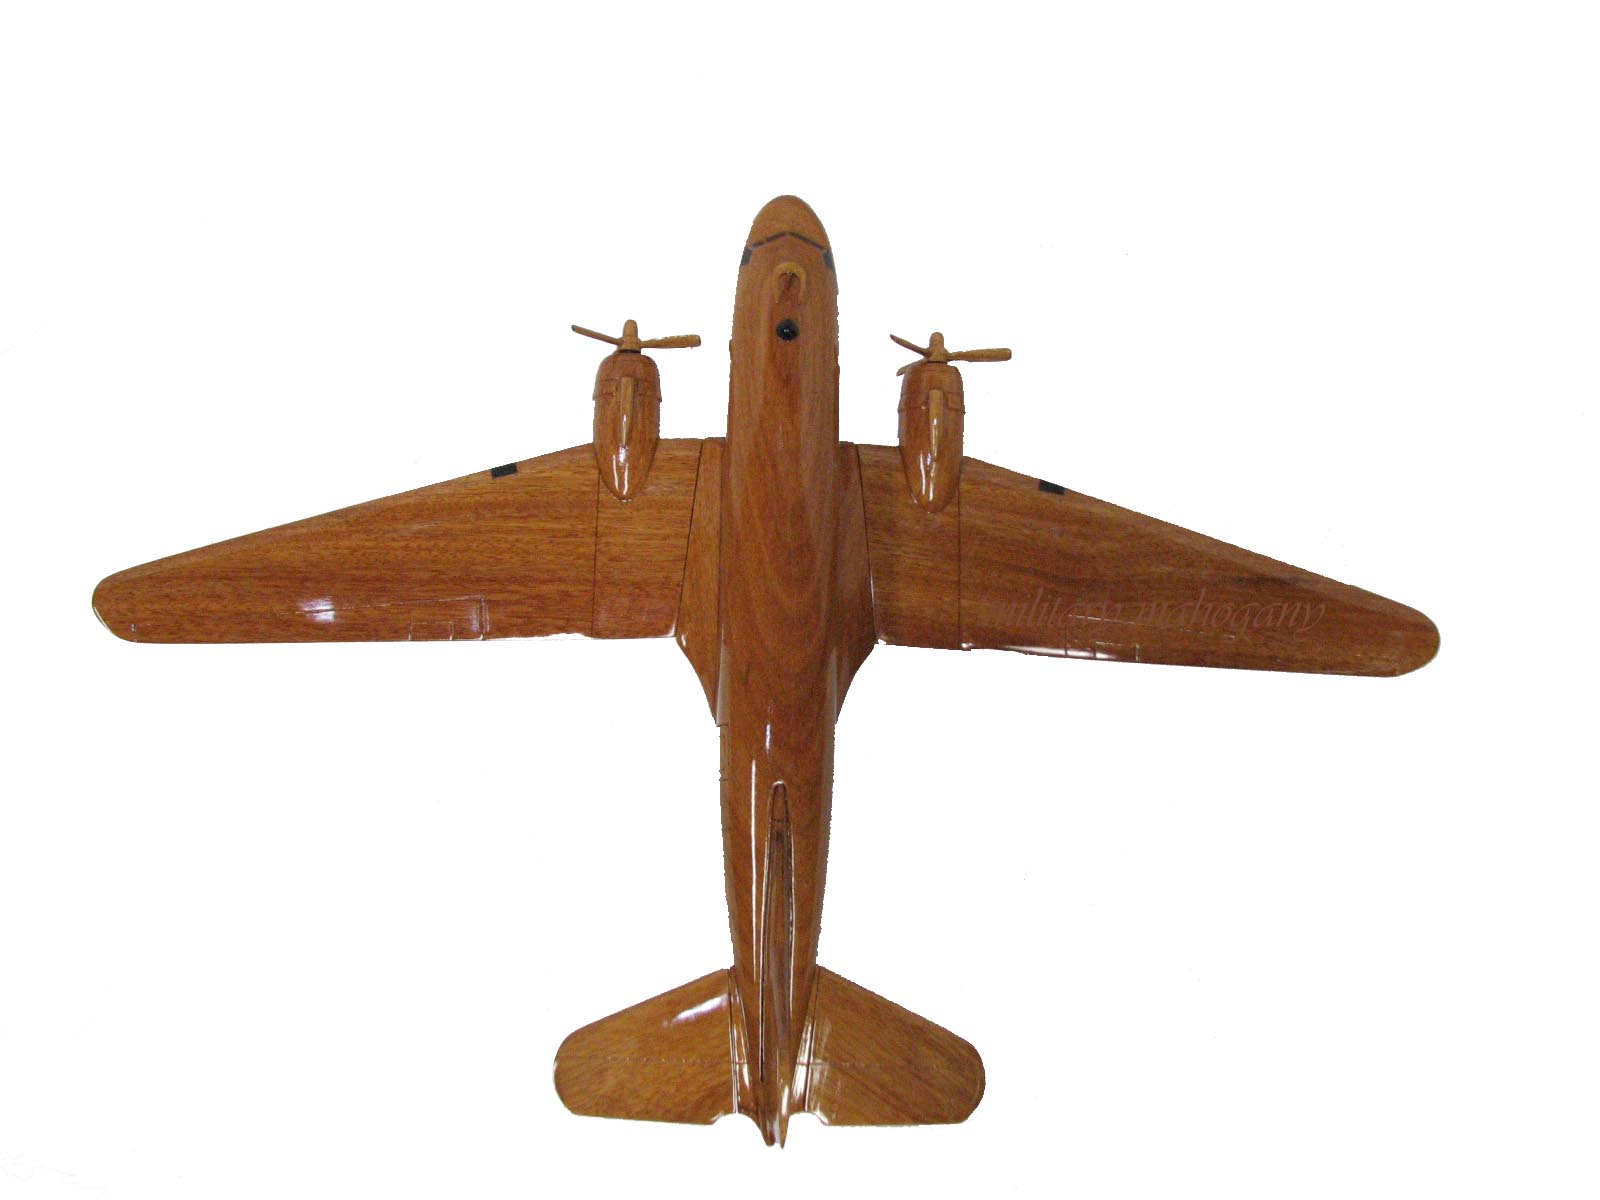 Wooden model photo